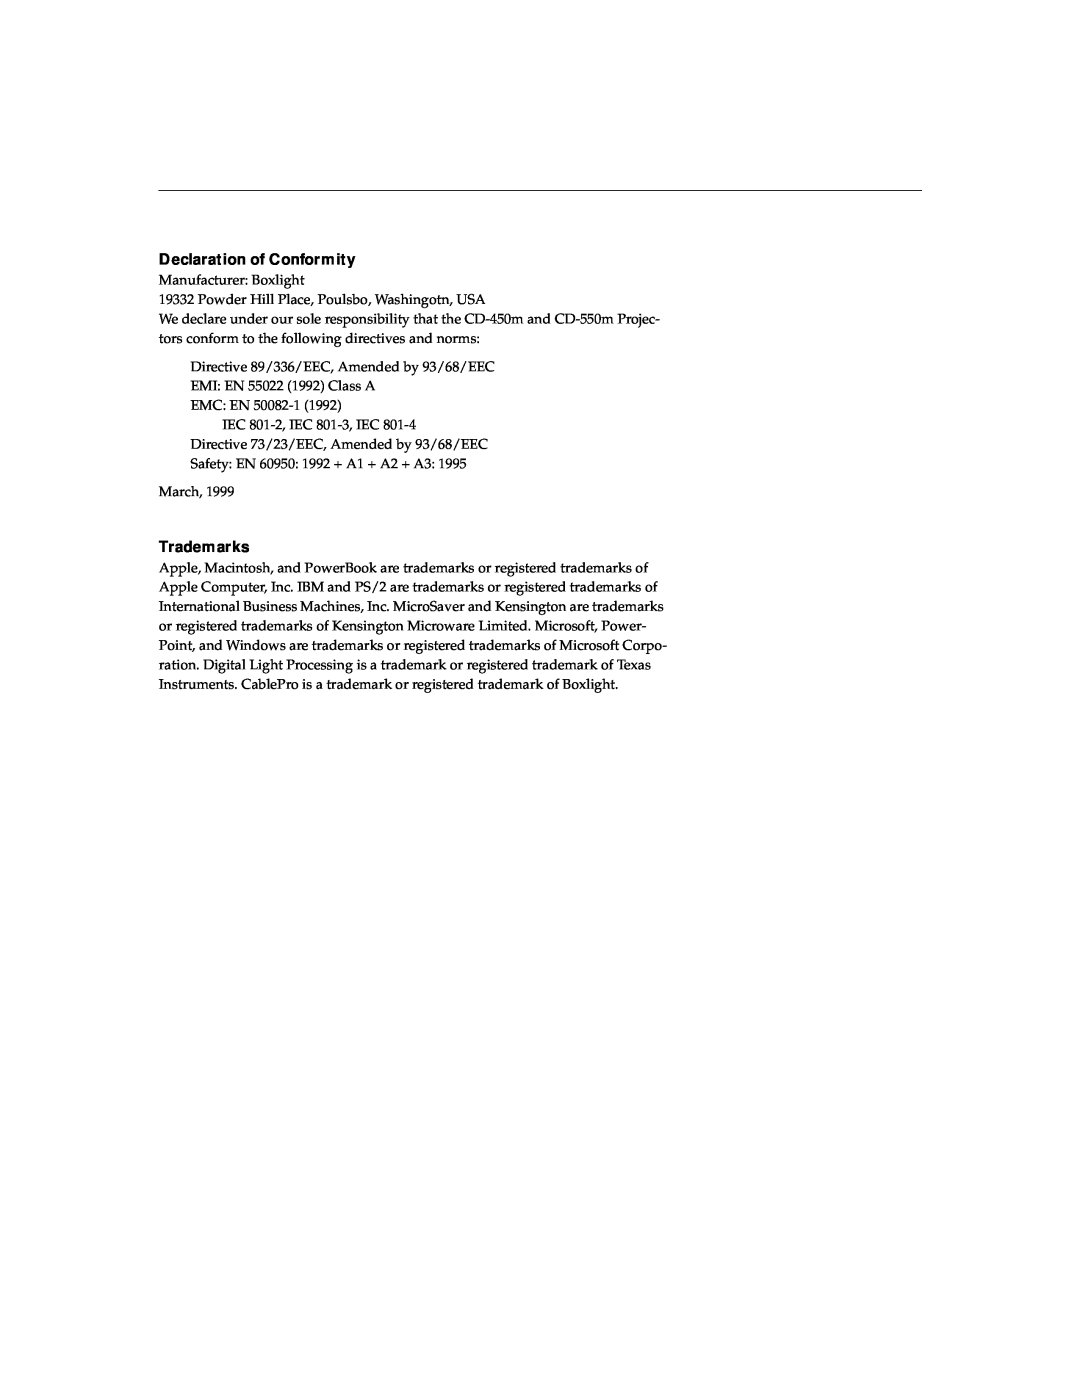 BOXLIGHT CD-450m, CD-550m manual Declaration of Conformity, Trademarks 